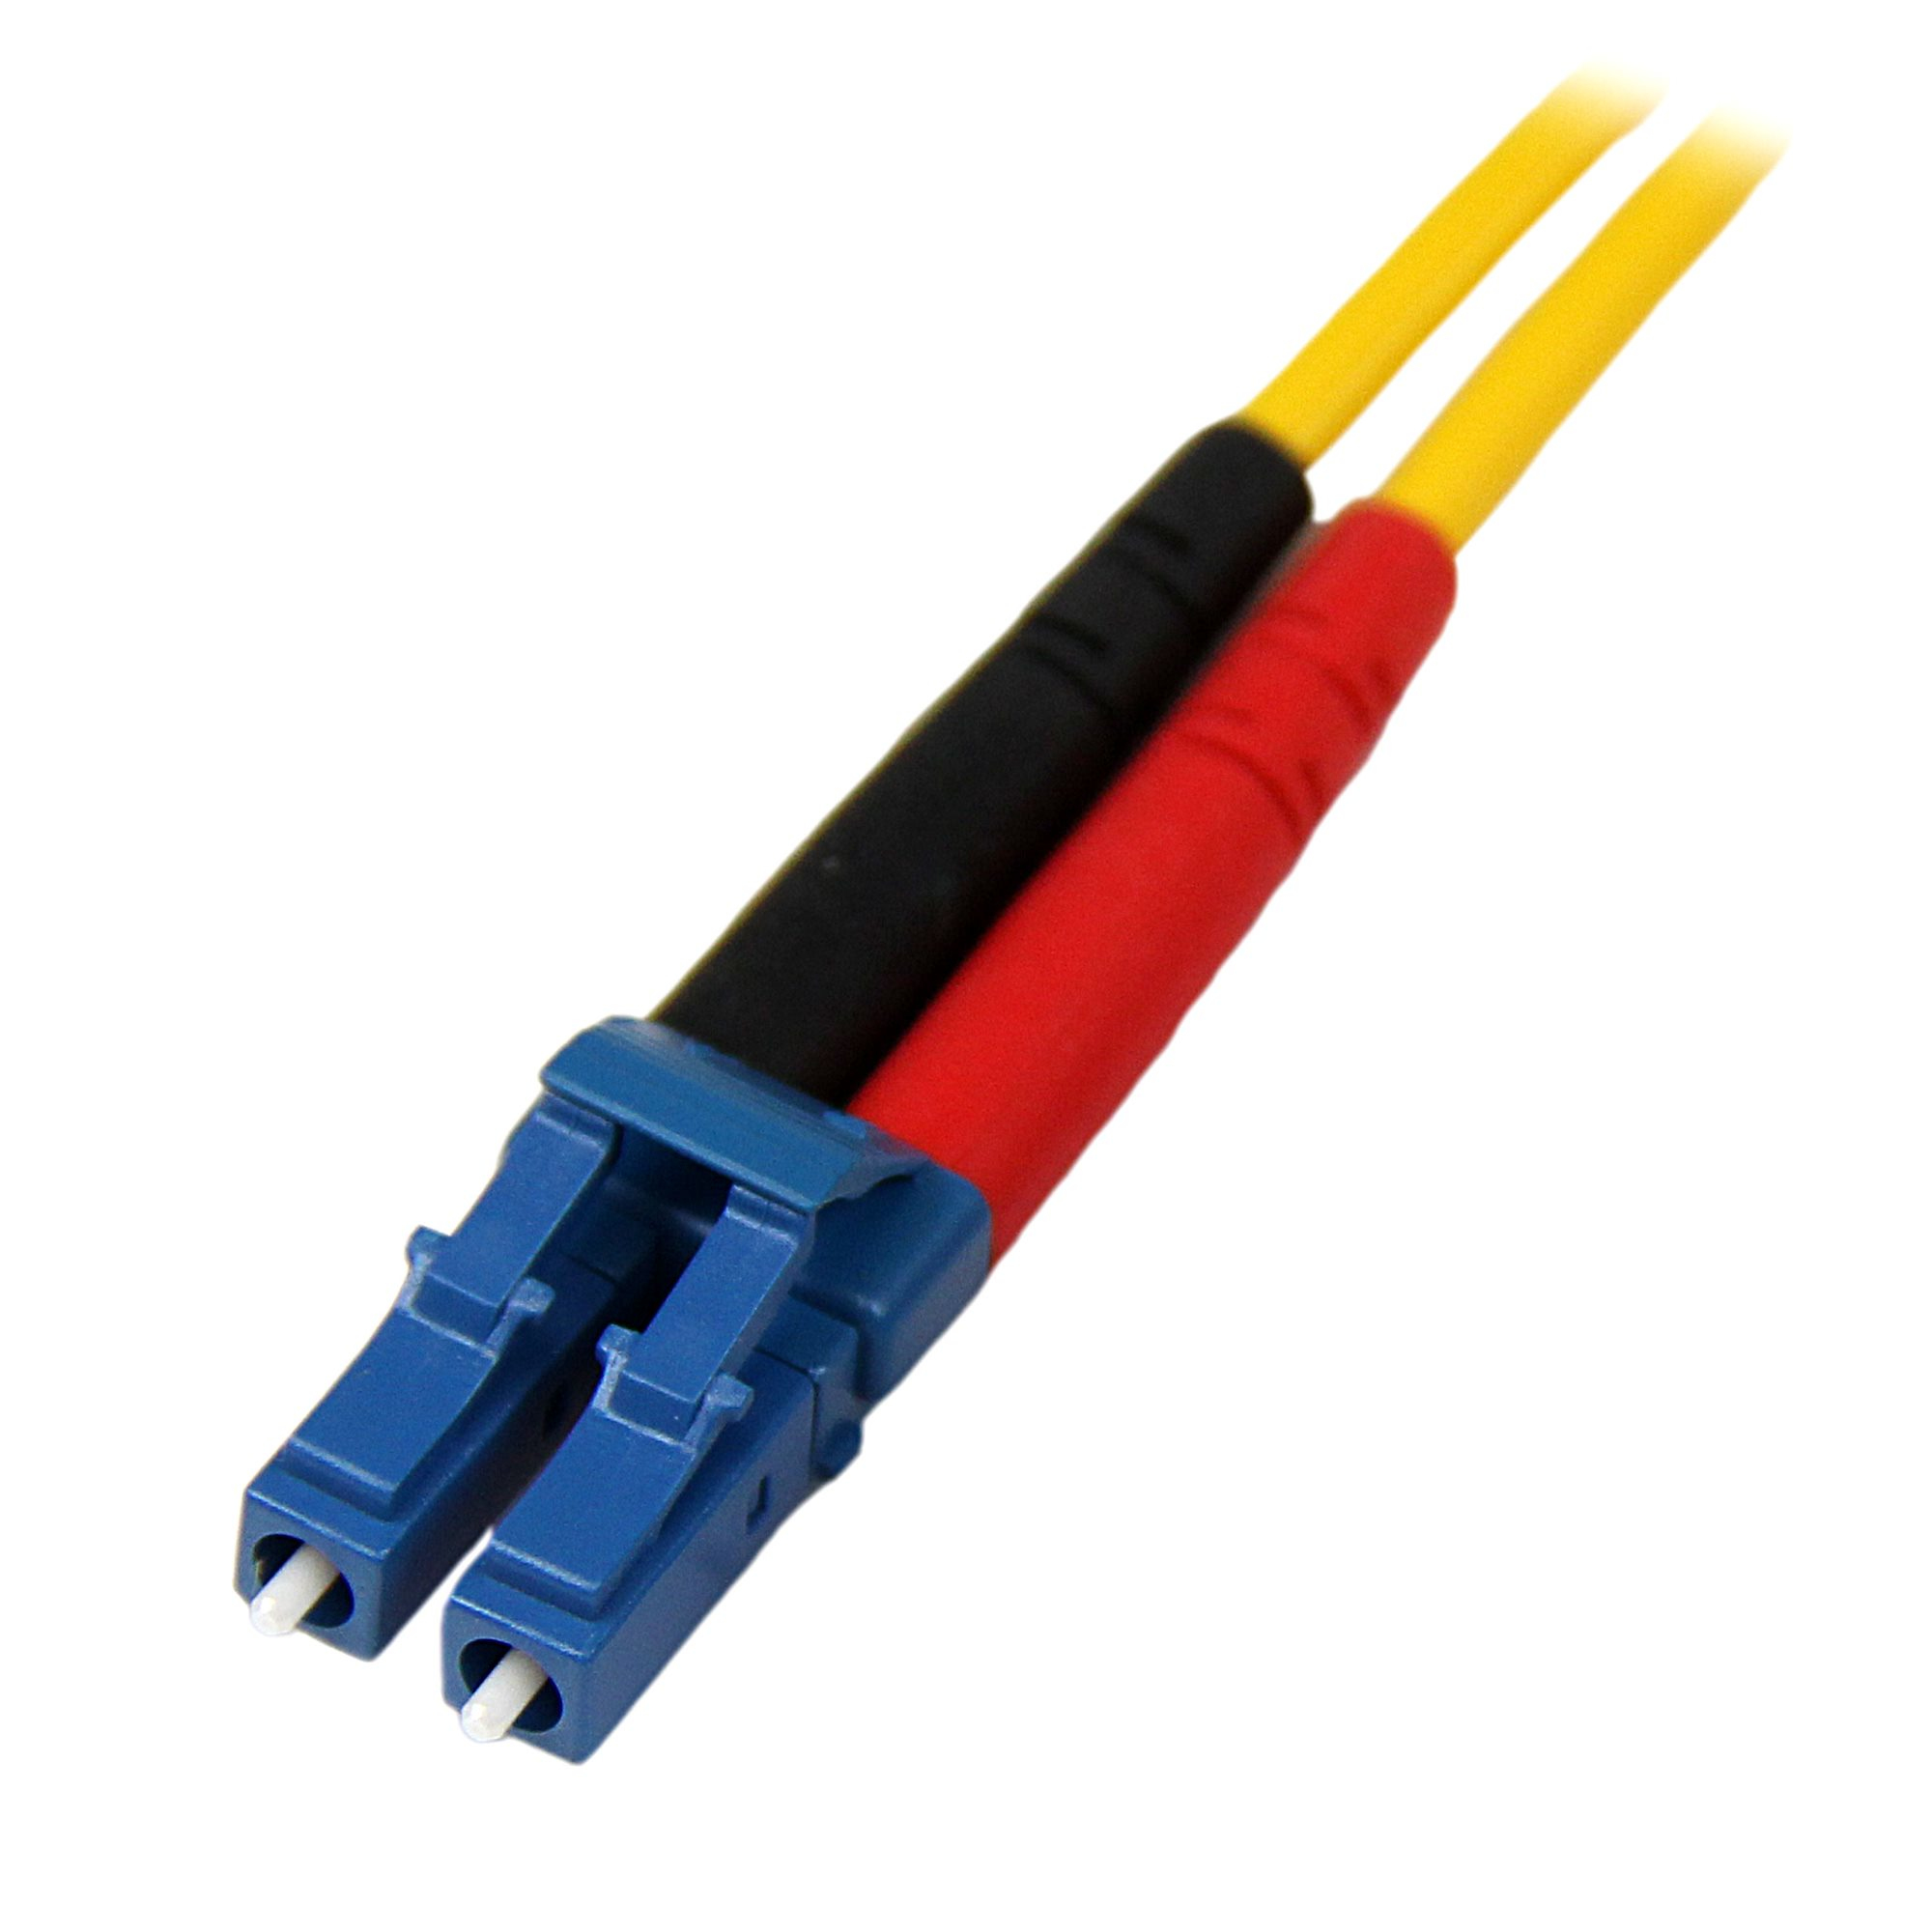 StarTech.com 7m Fiber Optic Cable - Single-Mode Duplex 9/125 - LSZH - LC/LC - OS1 - LC to LC Fiber Patch Cable (SMFIBLCLC7)